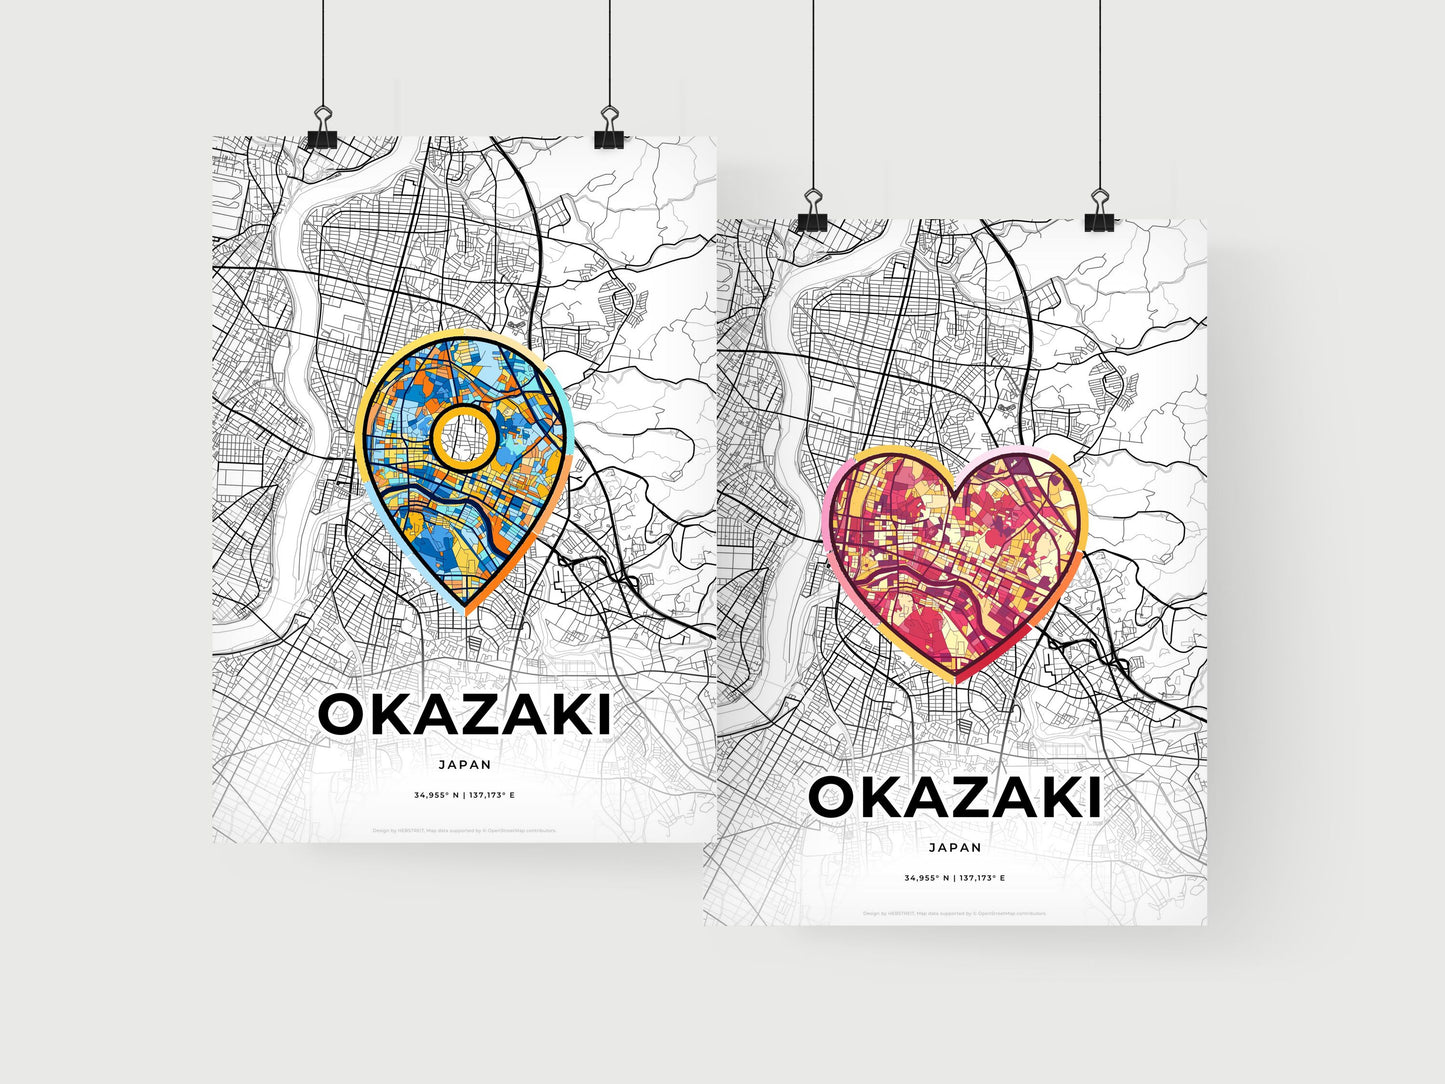 OKAZAKI JAPAN minimal art map with a colorful icon.